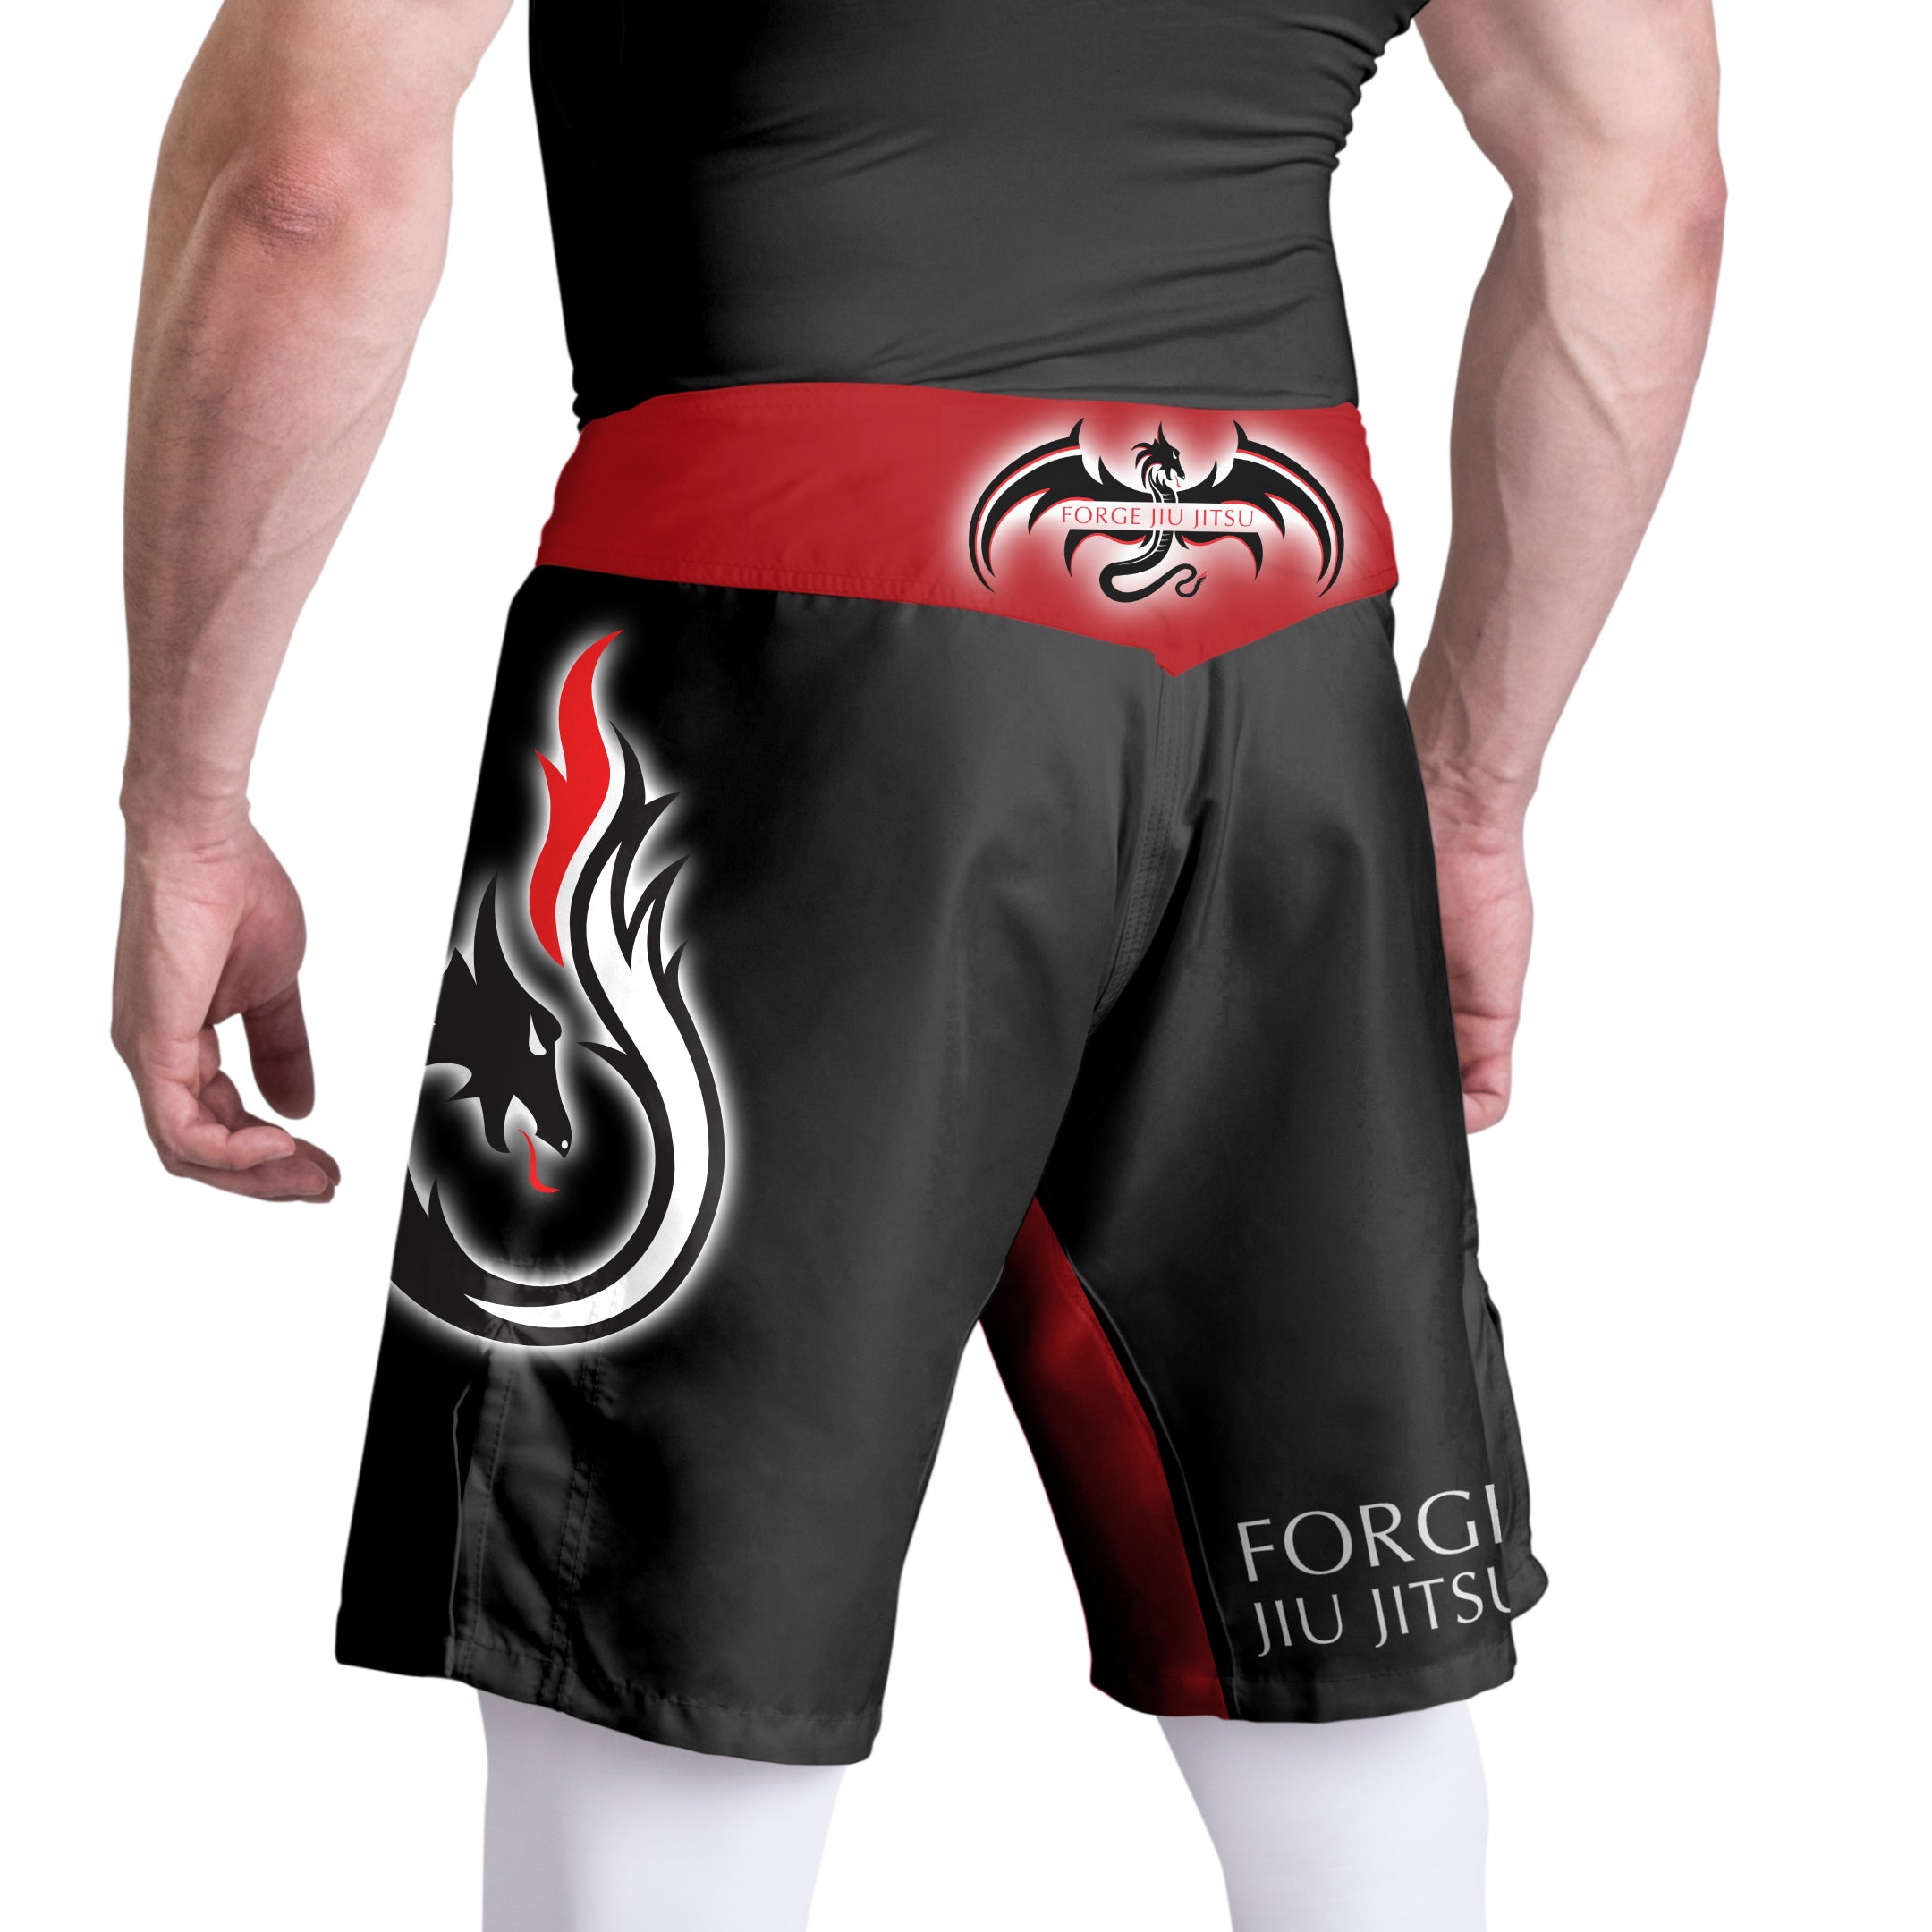 Forge Jiu Jitsu Fight Shorts - Zenko Fightwear